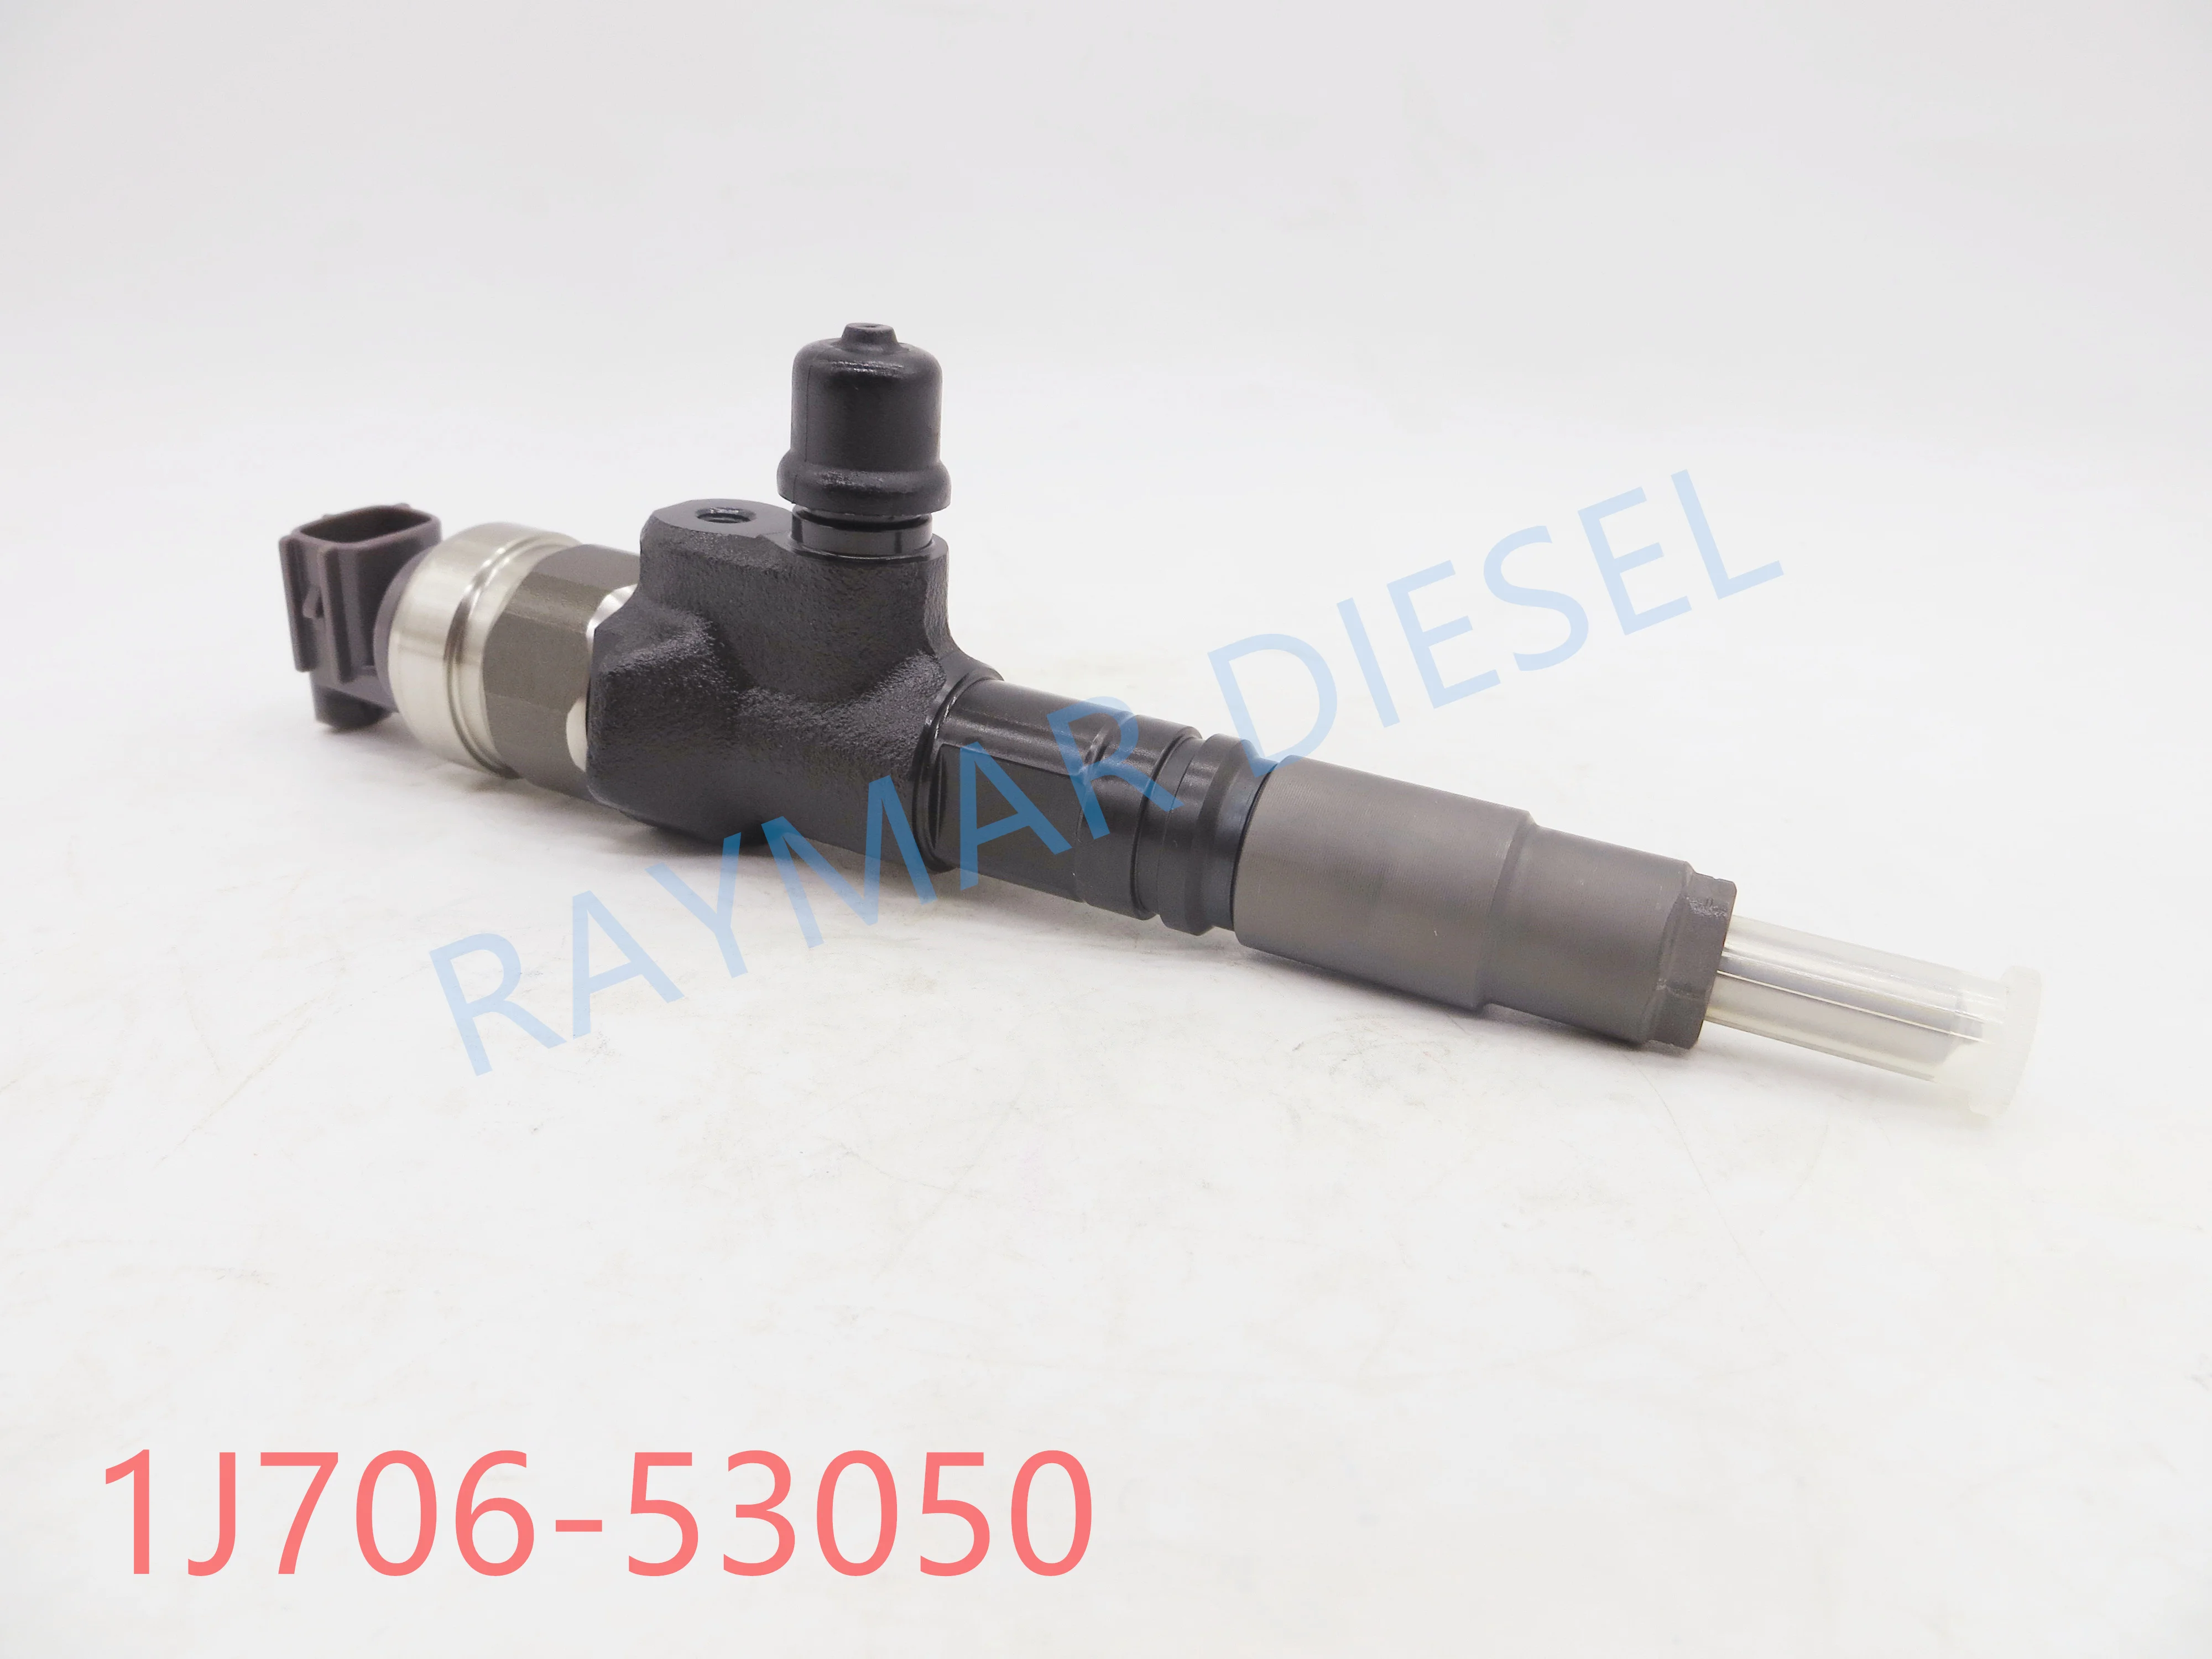 

Genuine Brand New Diesel Common Rail Fuel Injector 1J706-53052, 1J706-53050, 295050-1340